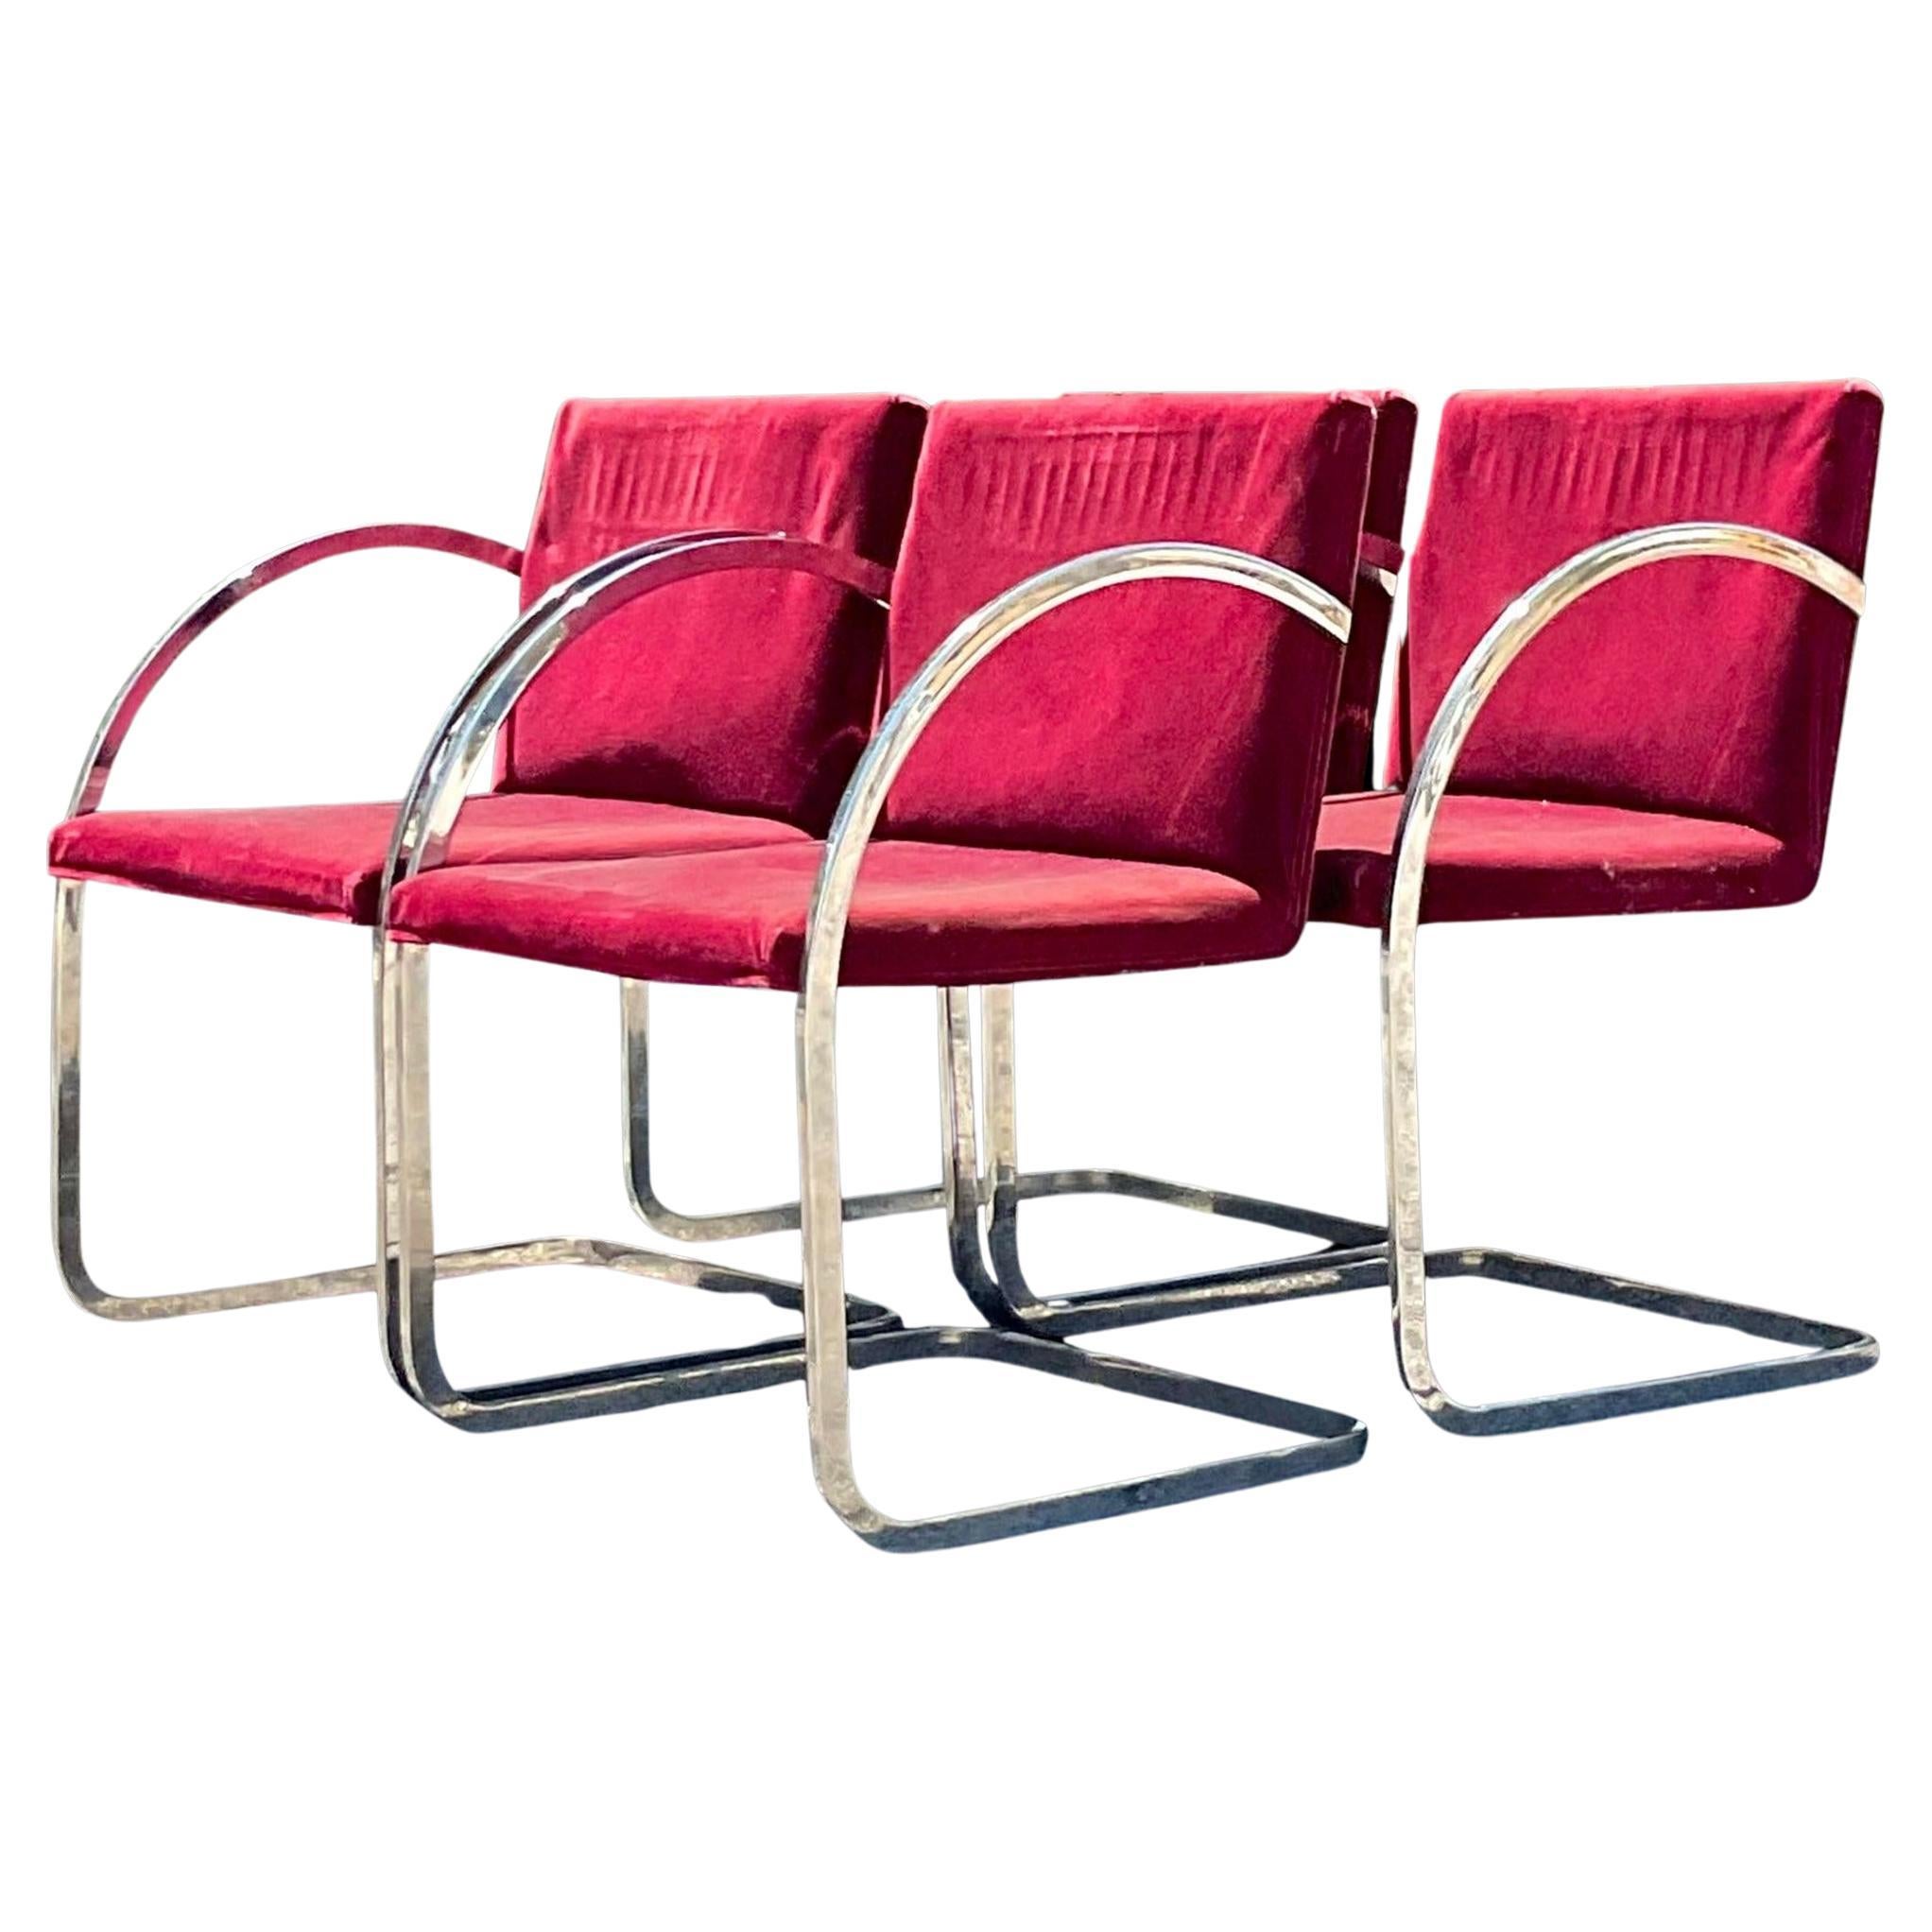 Vintage Boho Brueton Polished Chrome Dining Chairs - Set of 4 For Sale